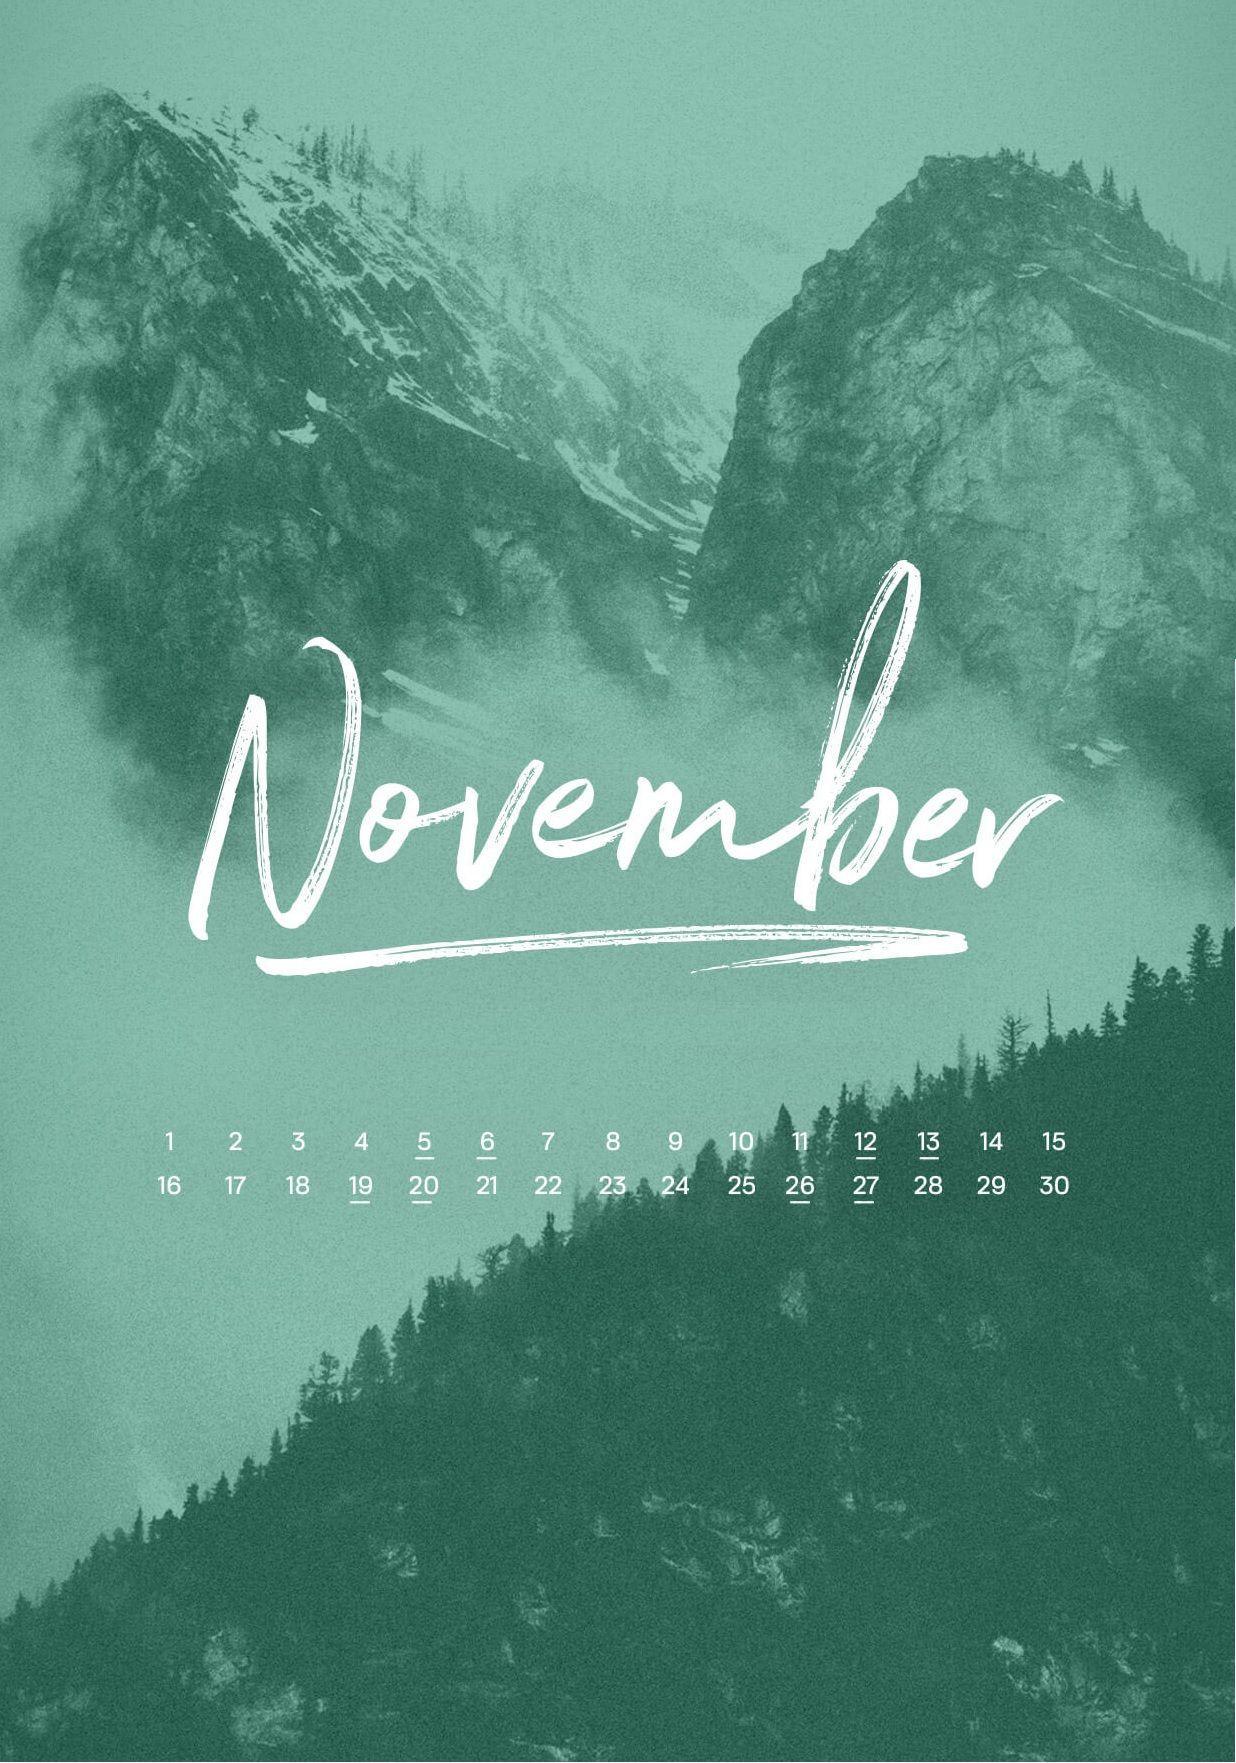 iPhone November 2018 Calendar Wallpaper. great background